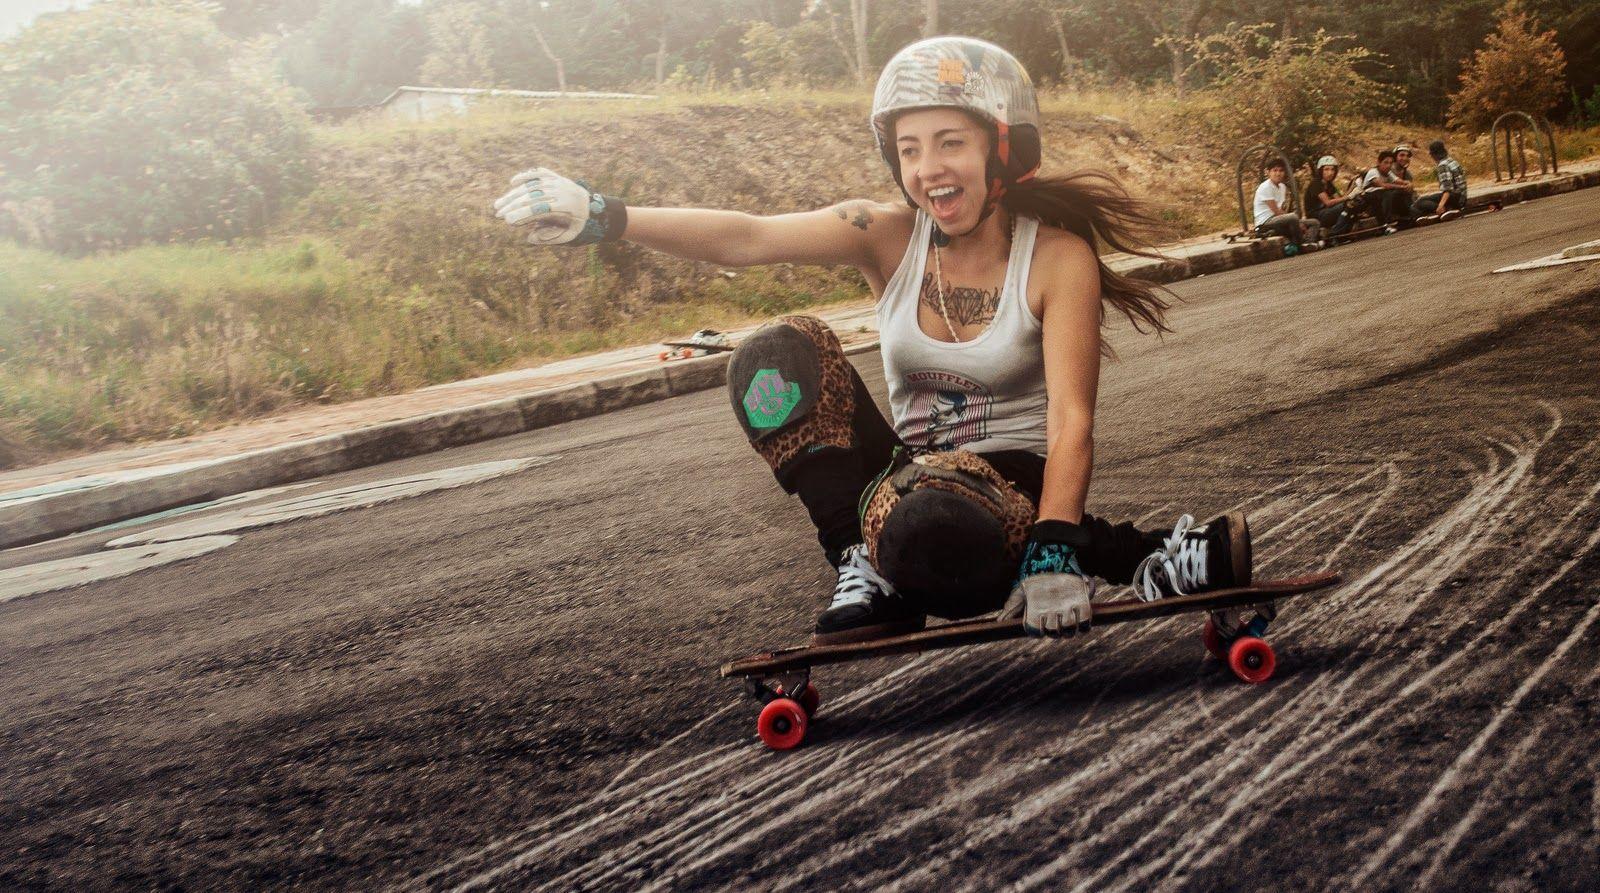 Skateboard Girls Wallpapers - Wallpaper Cave